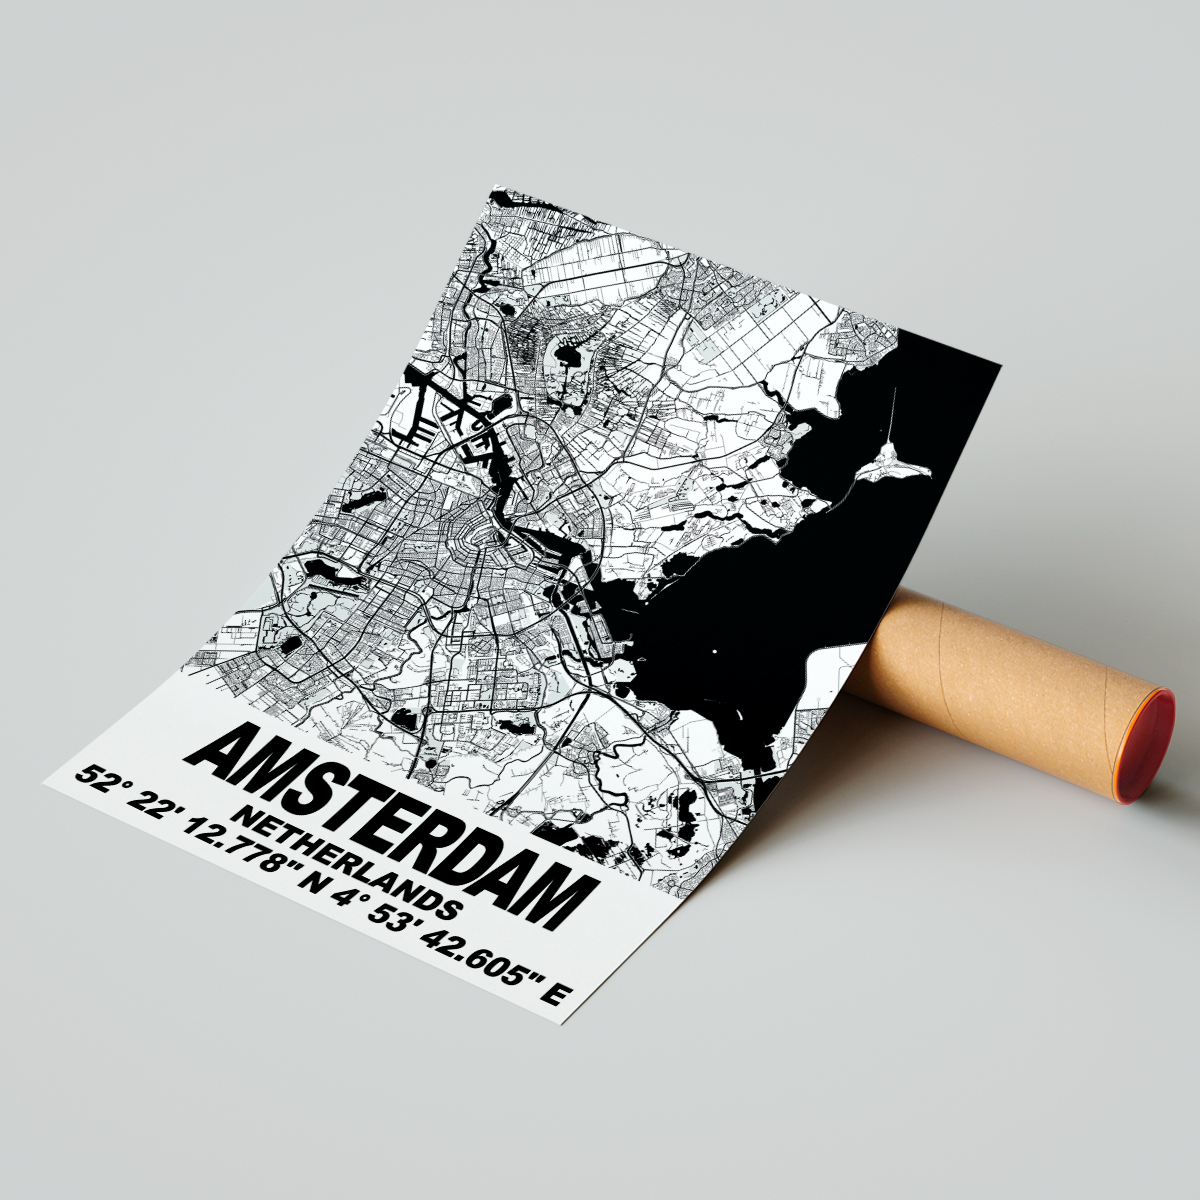 Affiche Carte Amsterdam